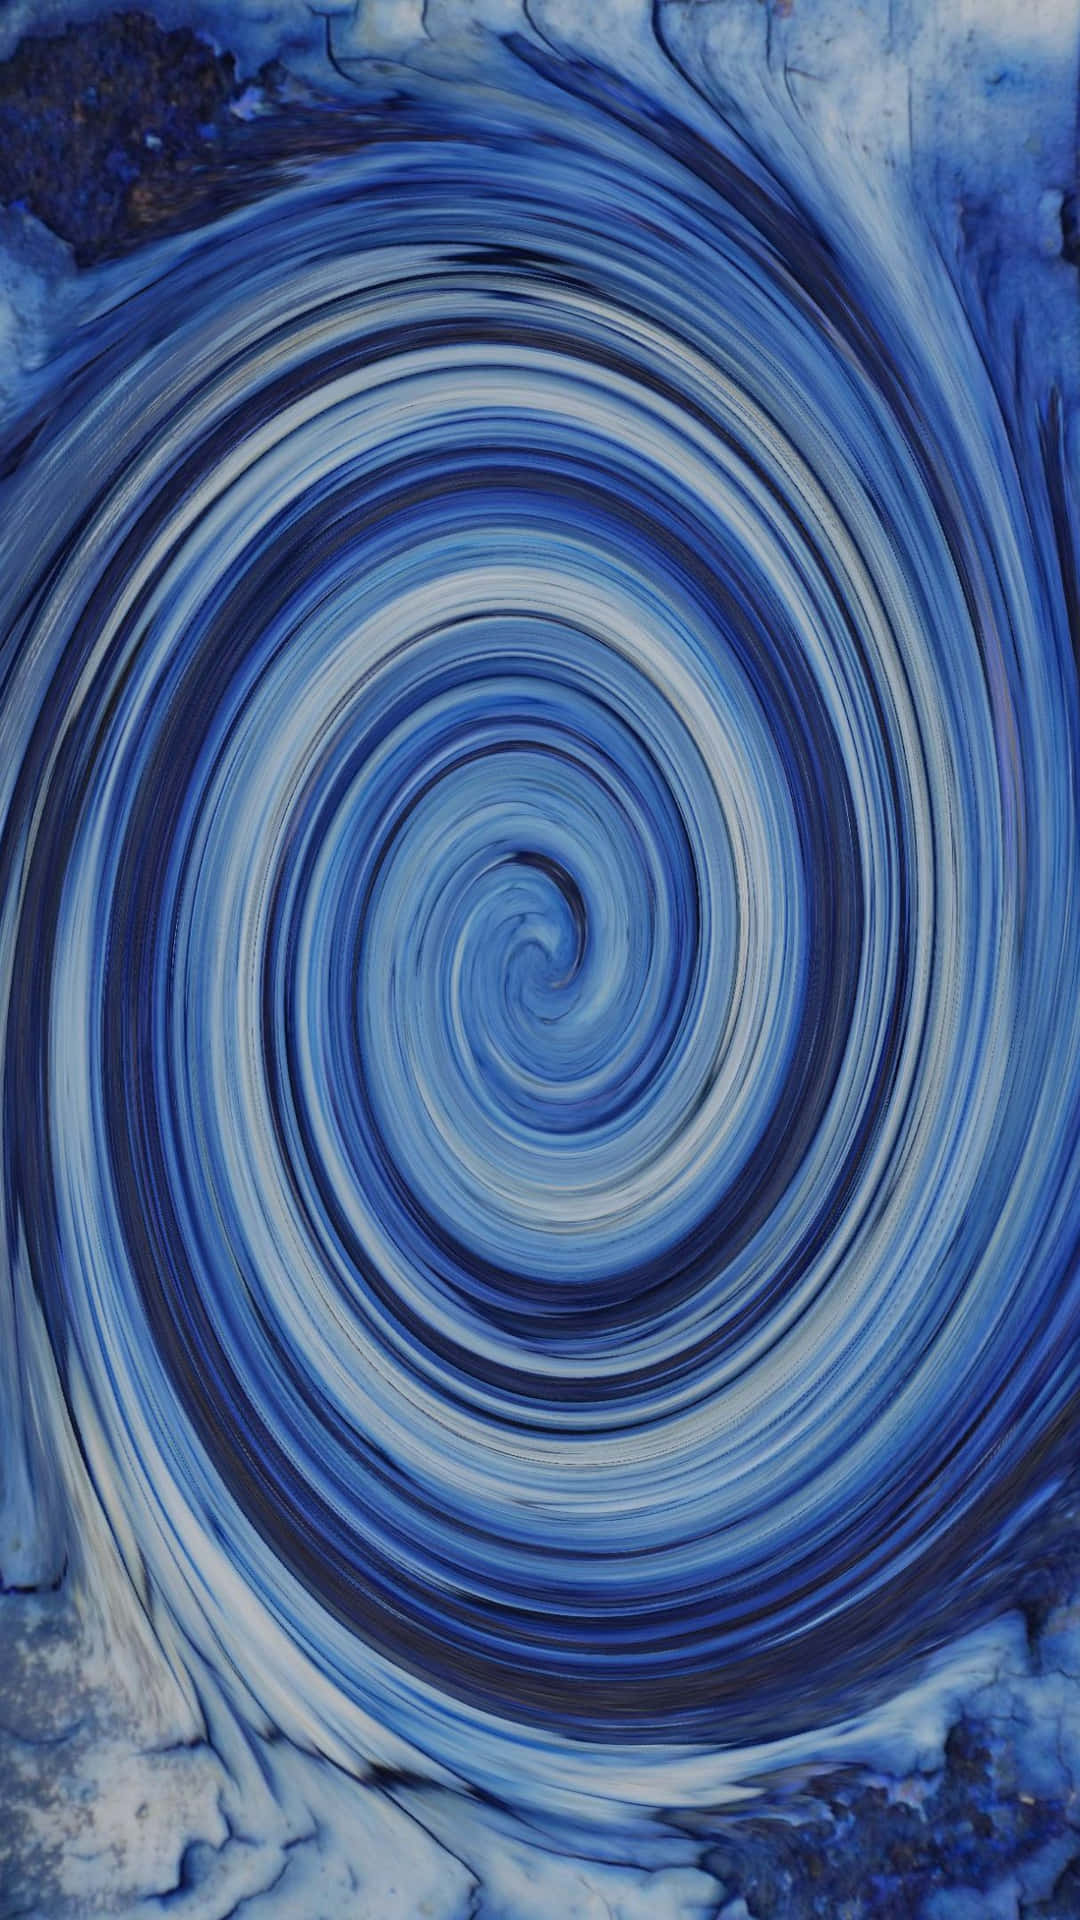 Mysterious Blue Swirl